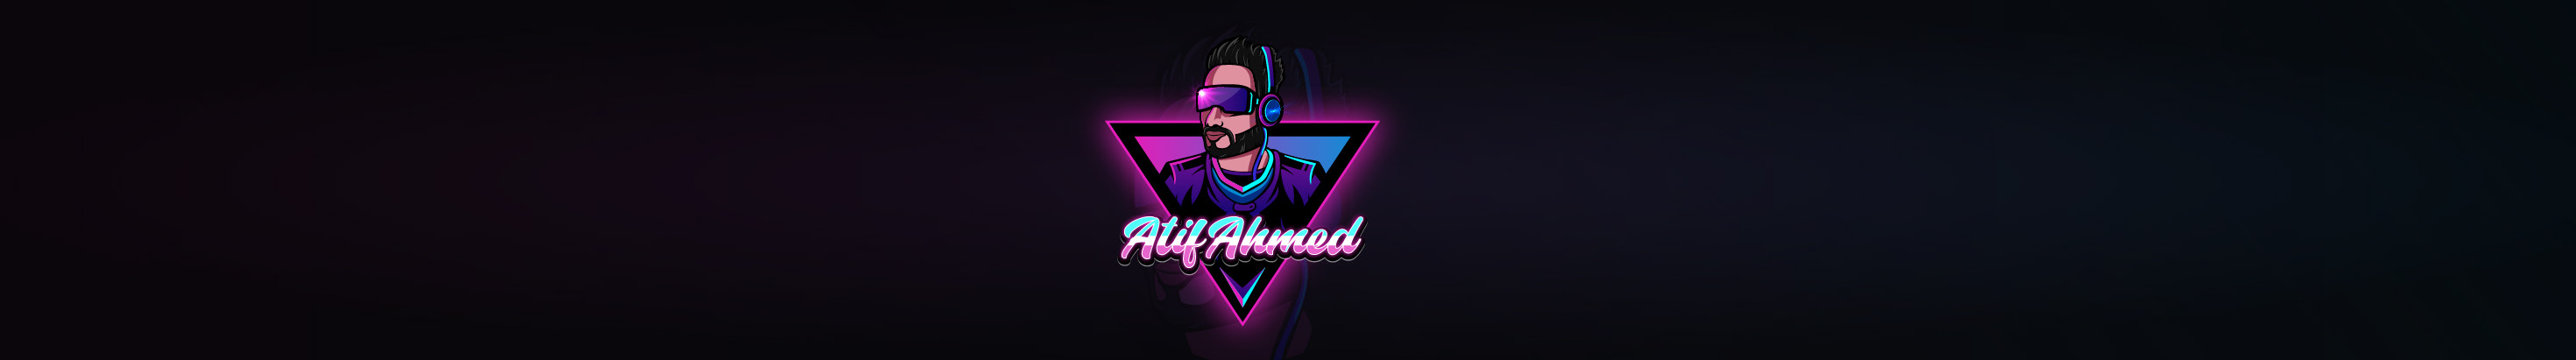 Baner profilu użytkownika Atif Ahmed